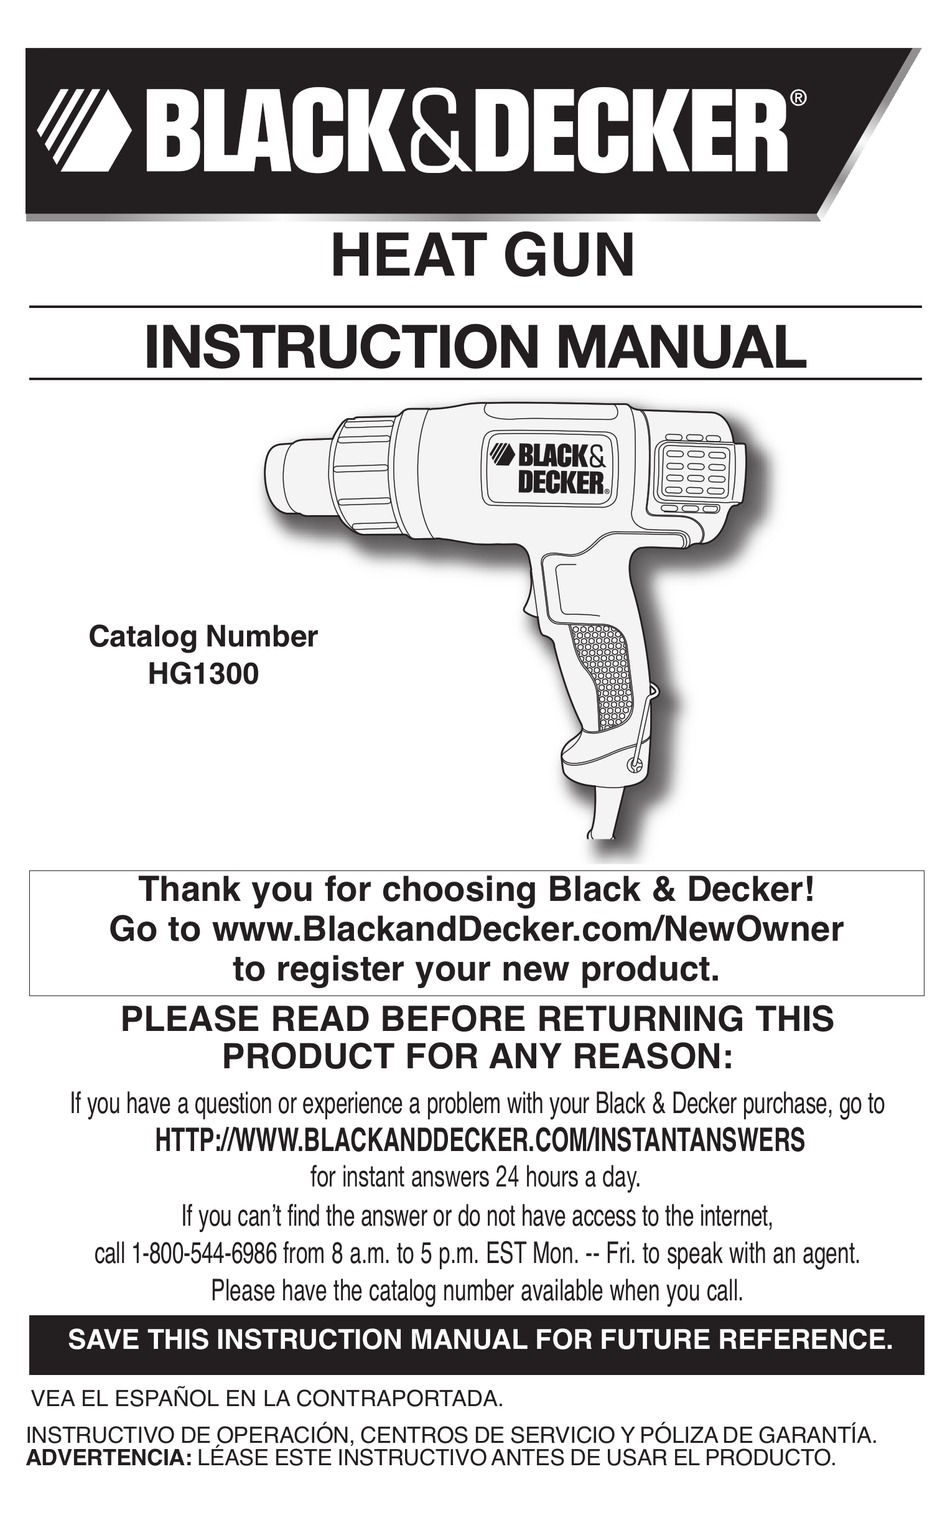 BLACK & DECKER 90500690 INSTRUCTION MANUAL Pdf Download